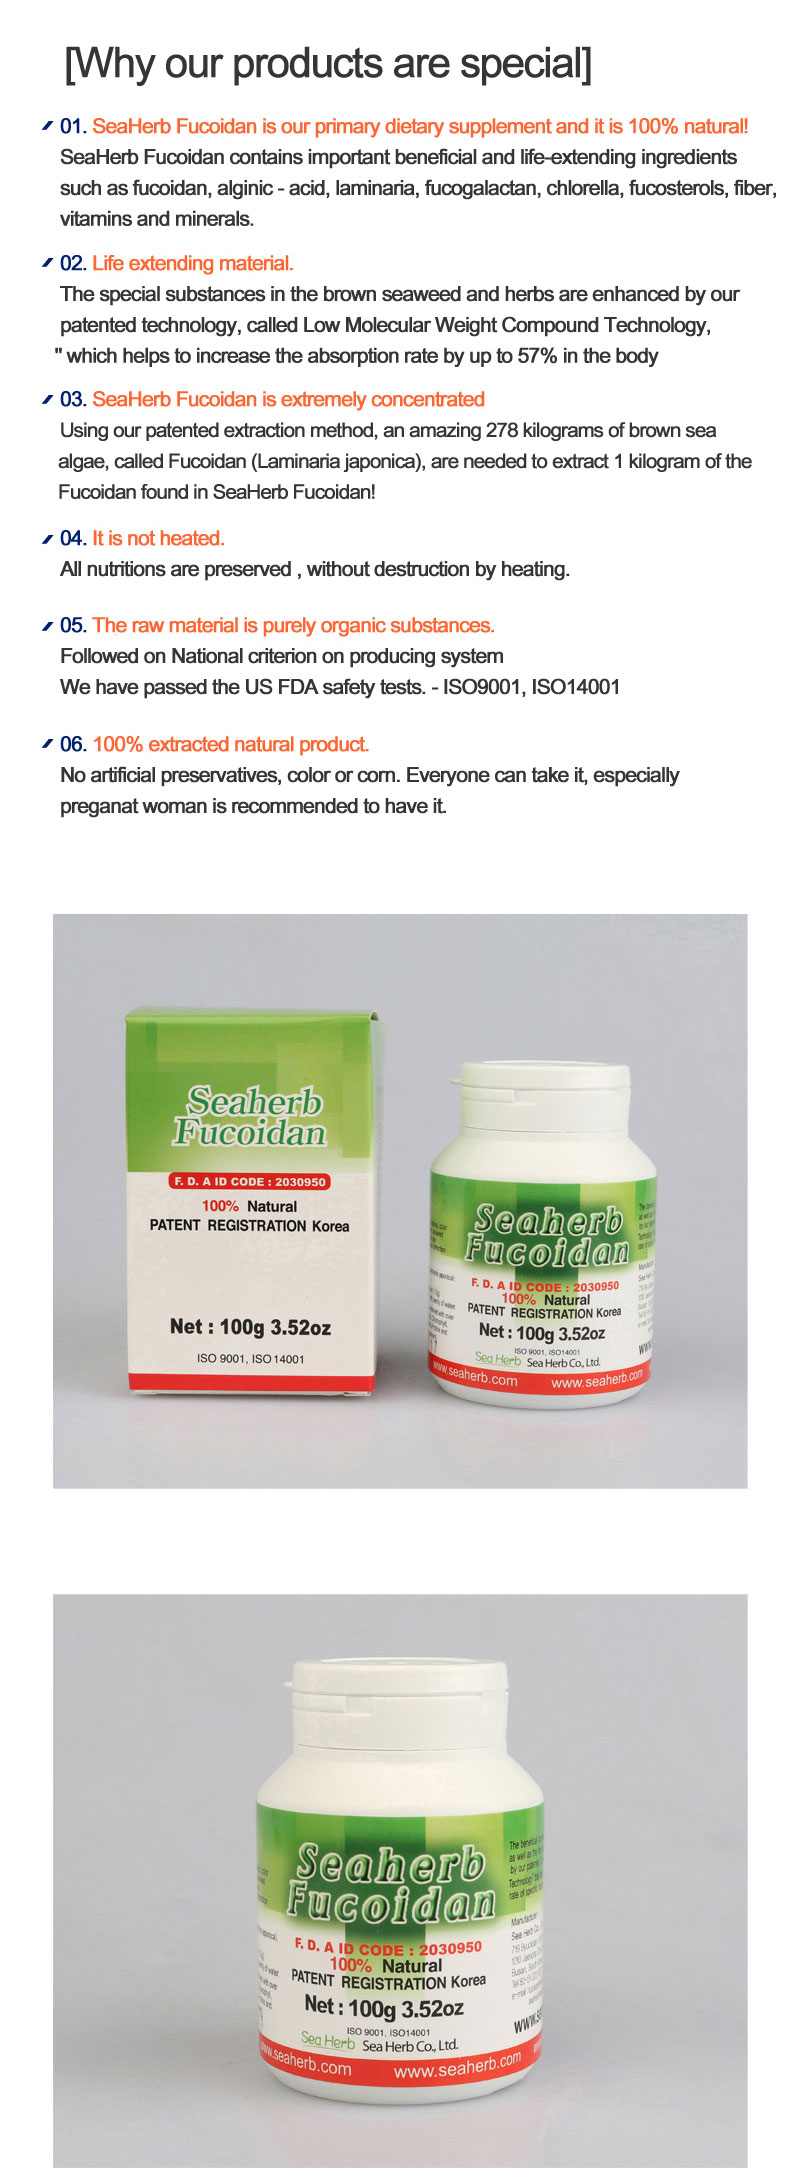 fucoidan-supplement-info